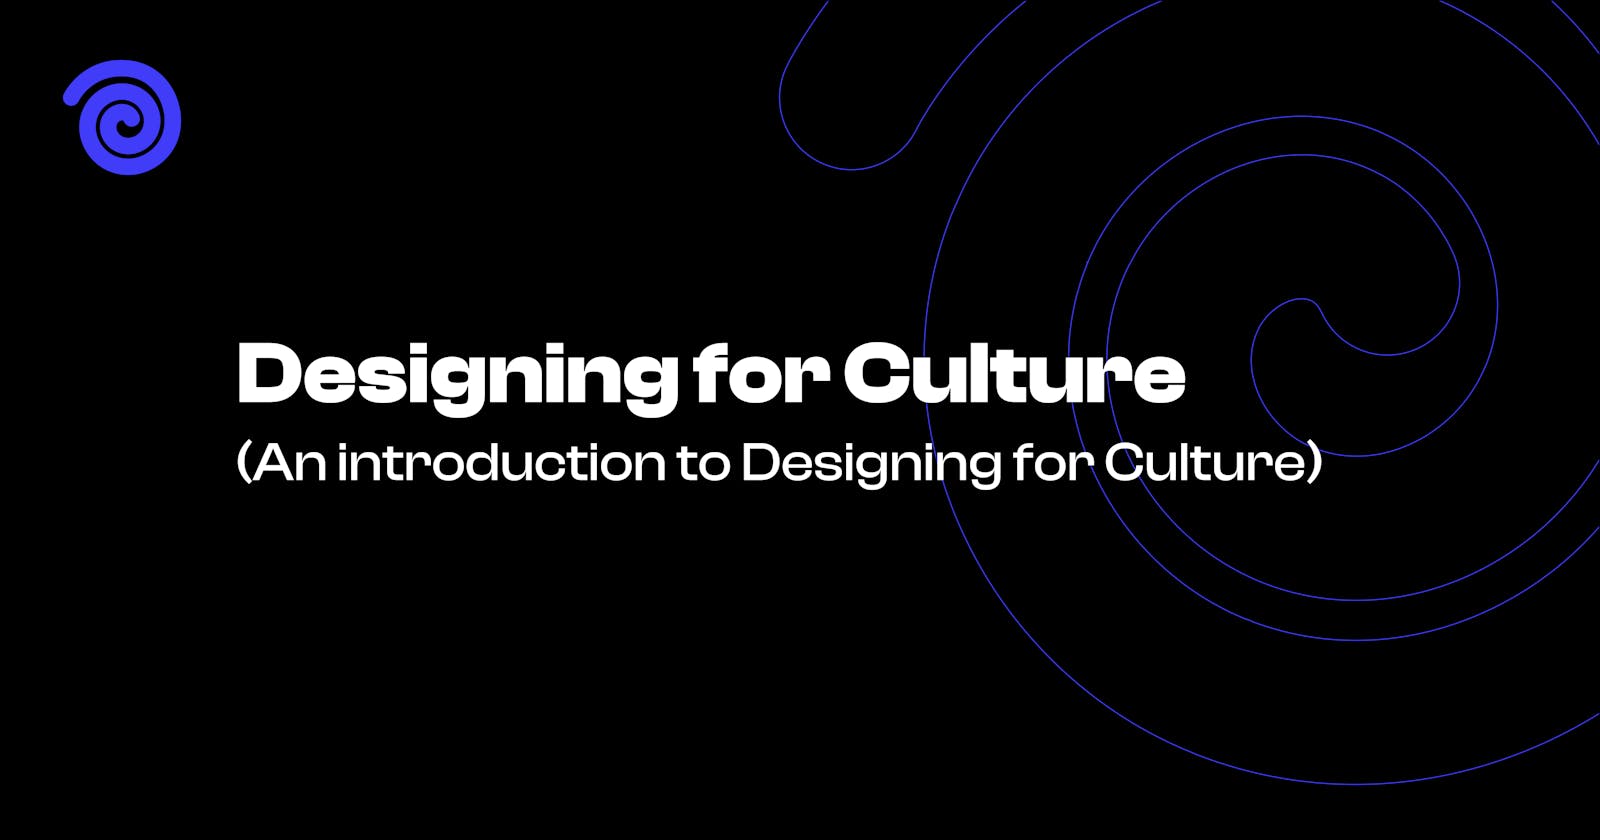 Designing for culture